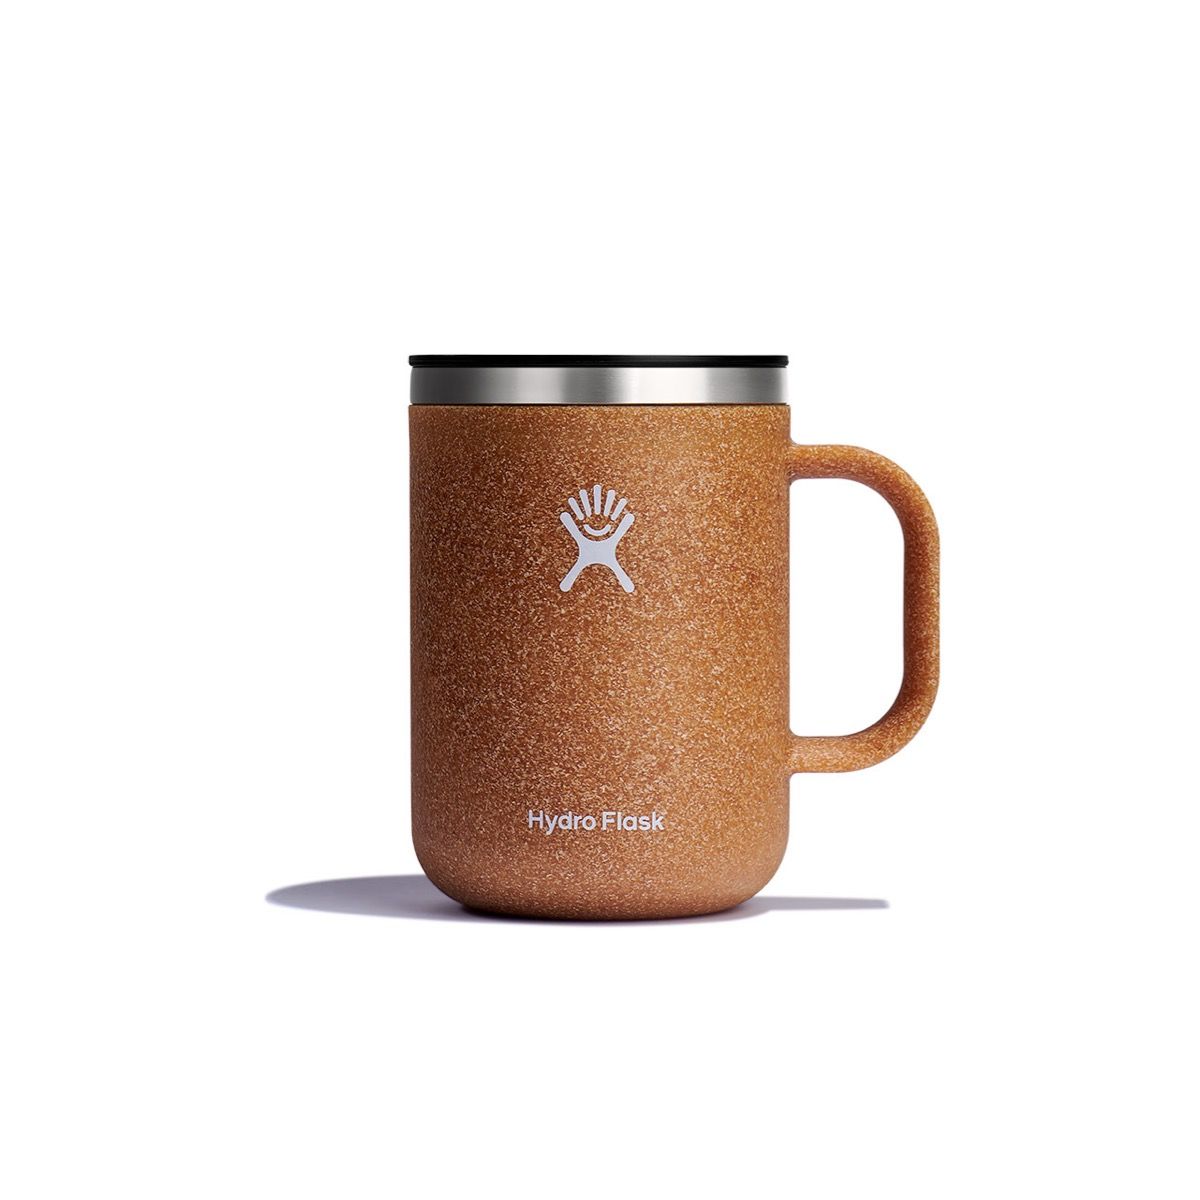 Hydro Flask Coffee Mug, 24 oz.